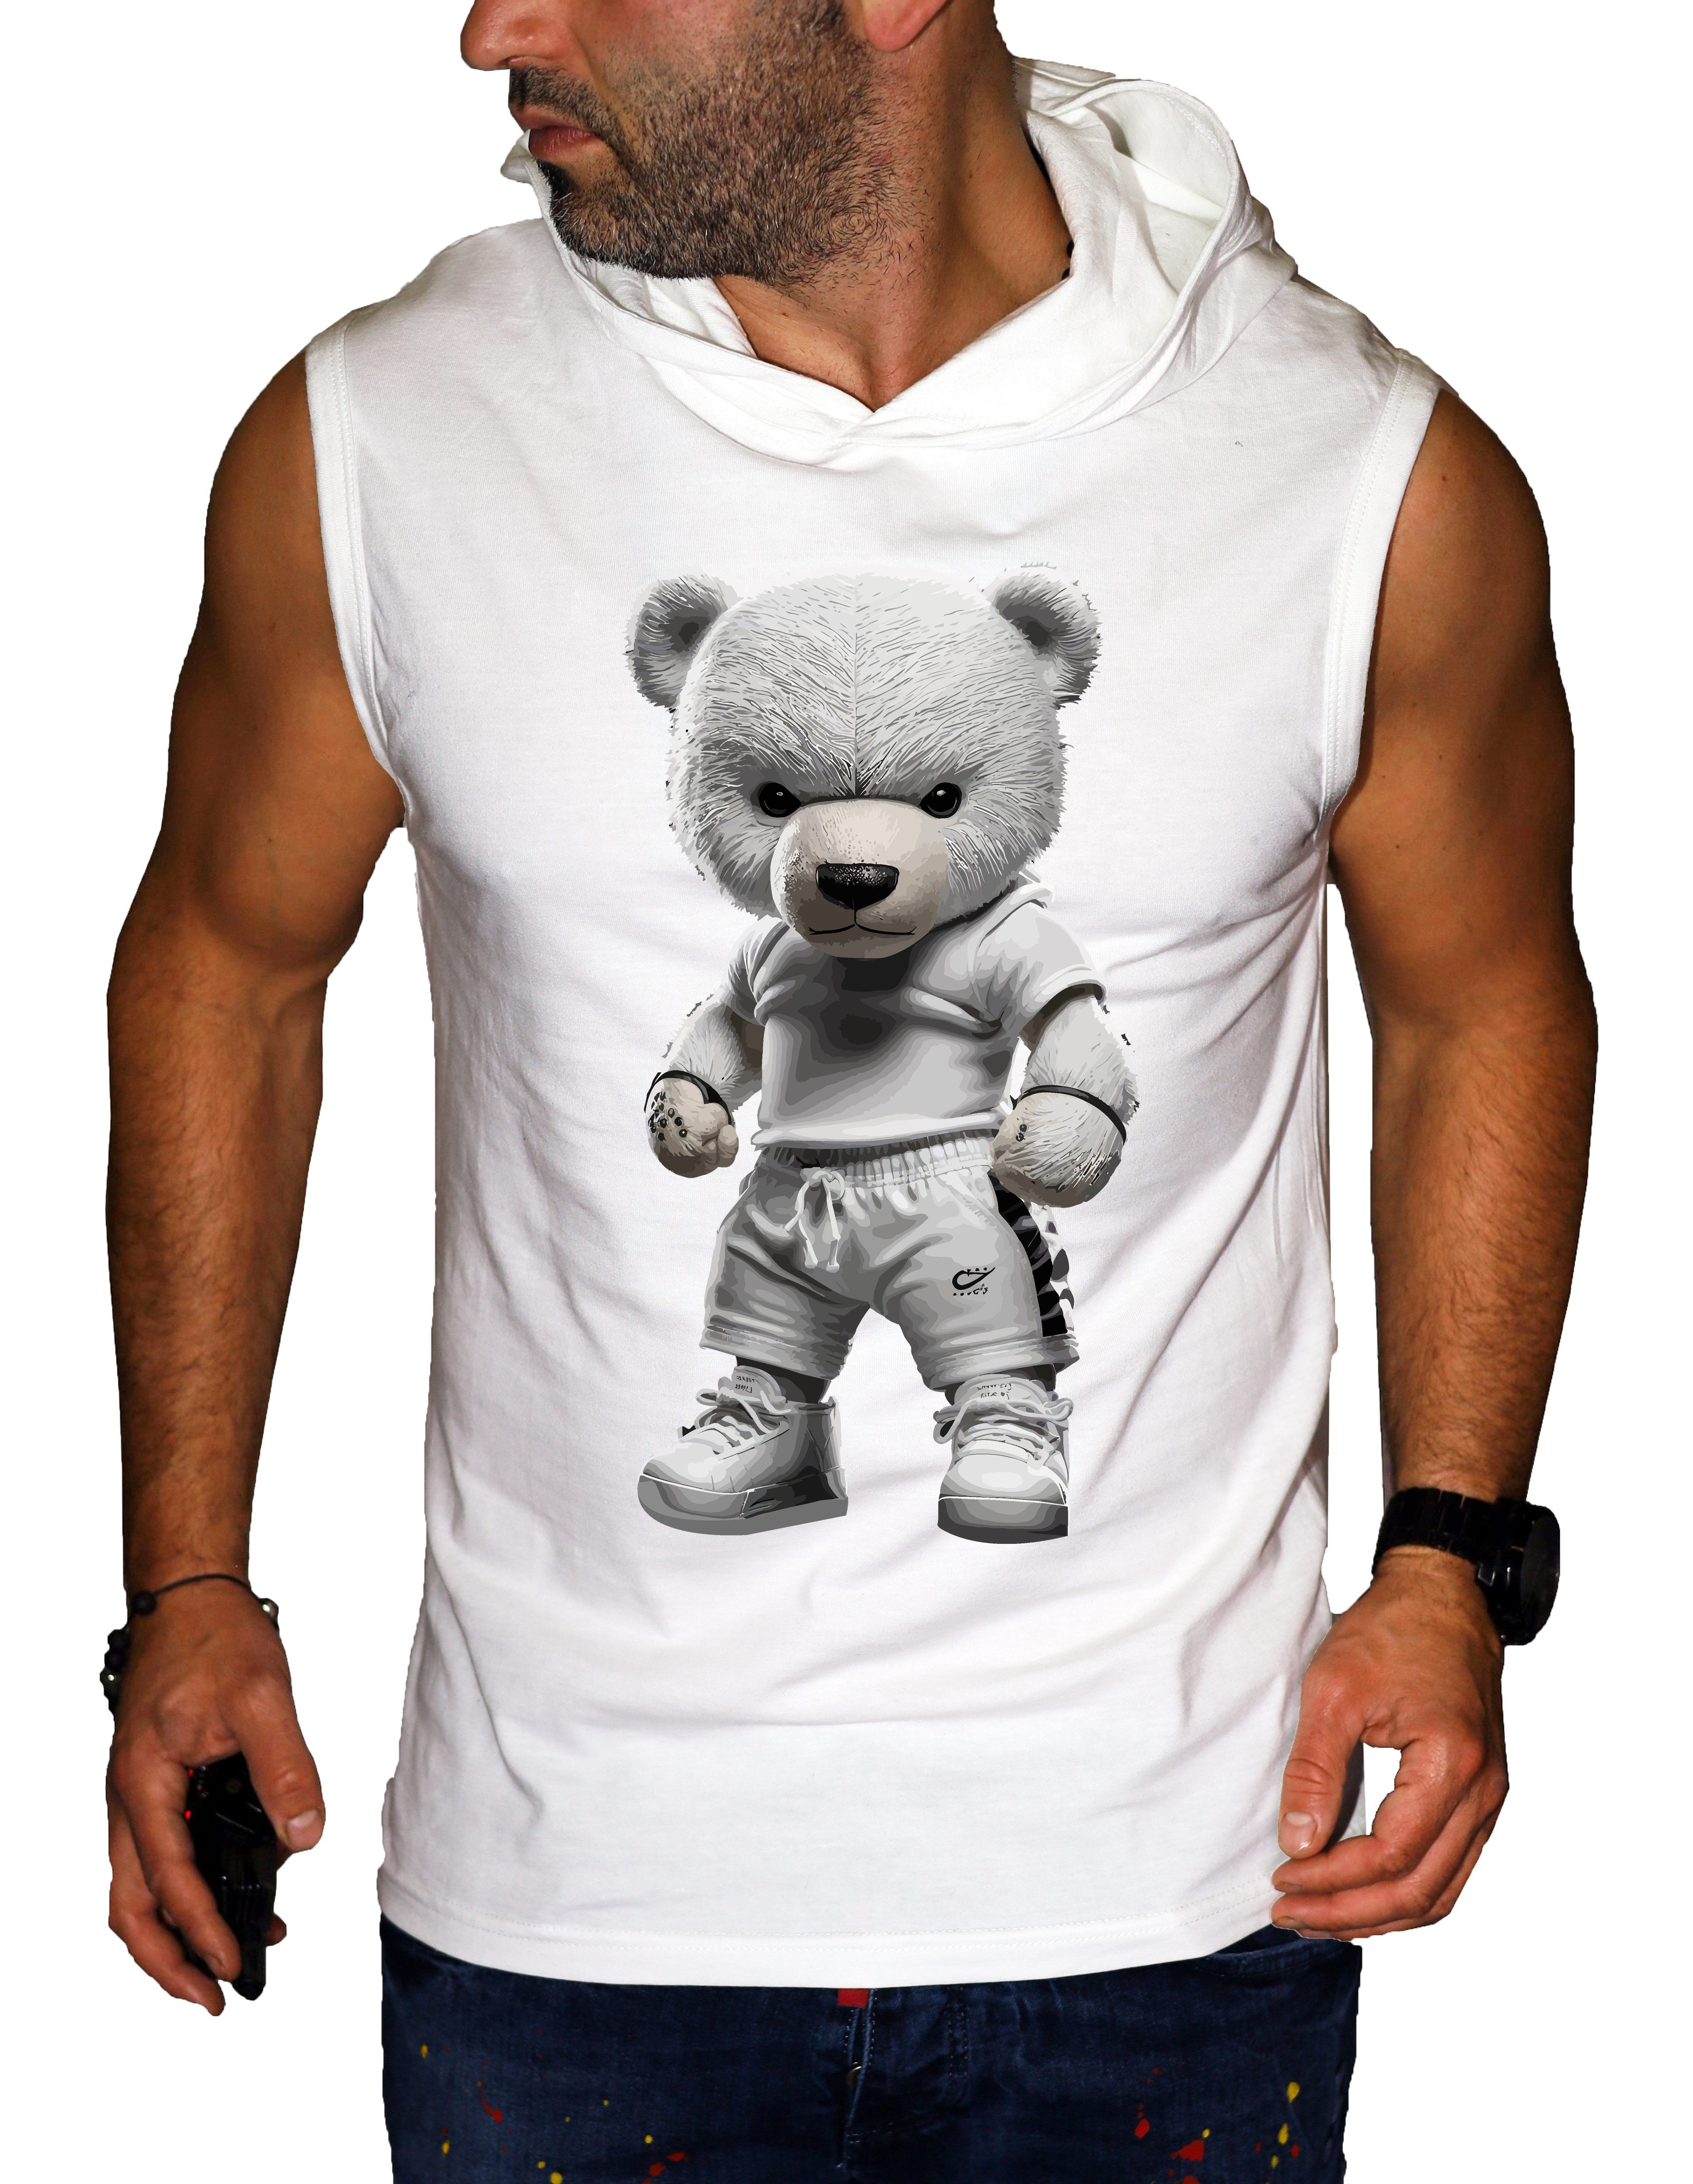 RMK Tanktop Herren Tanktop Muskelshirt Gym Ärmellos Shirt mit Teddybär Druck aus Baumwolle